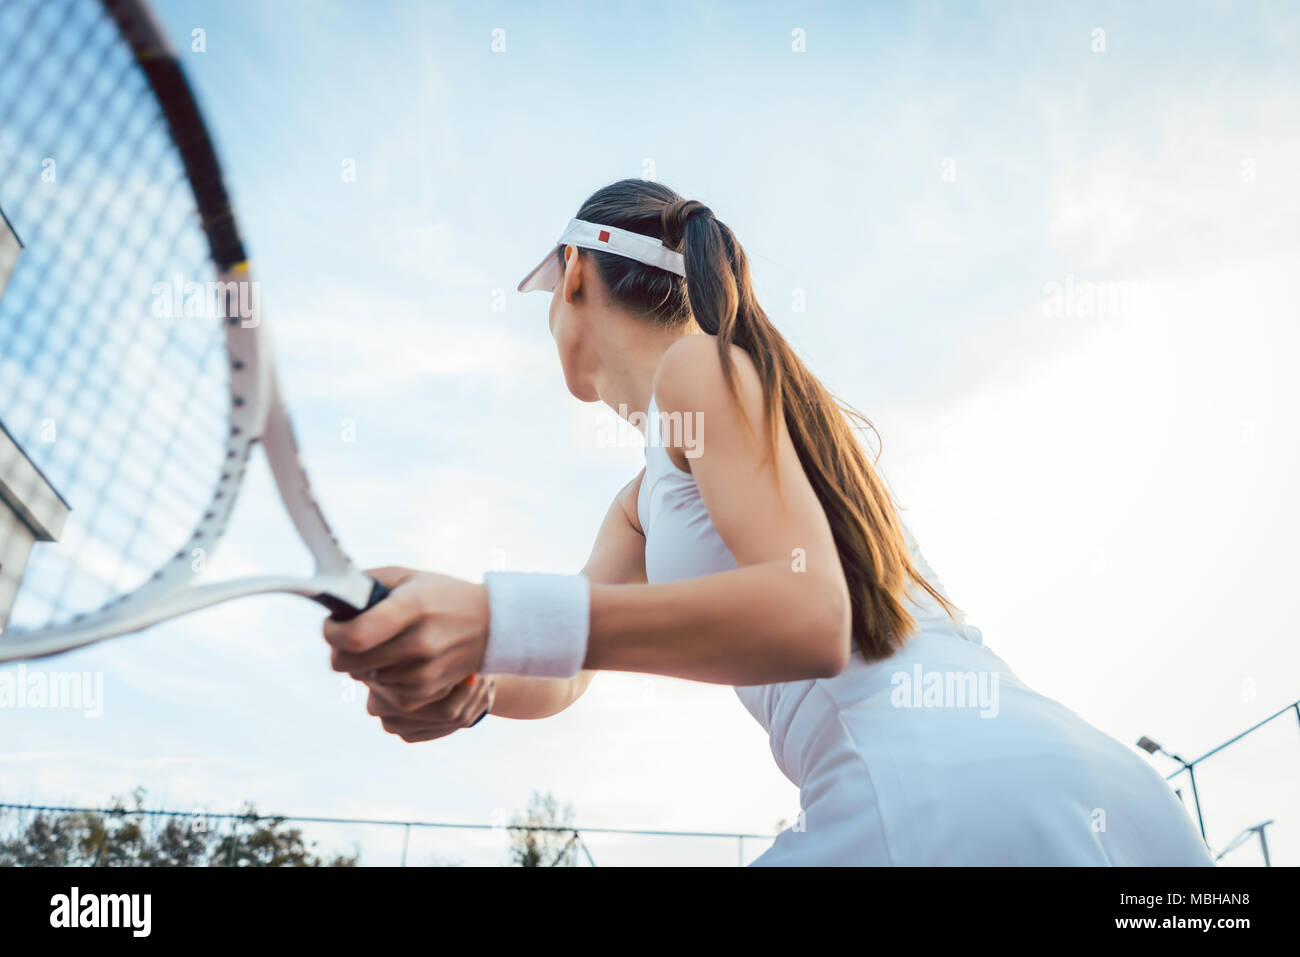 Woman giving return playing tennis Stock Photo